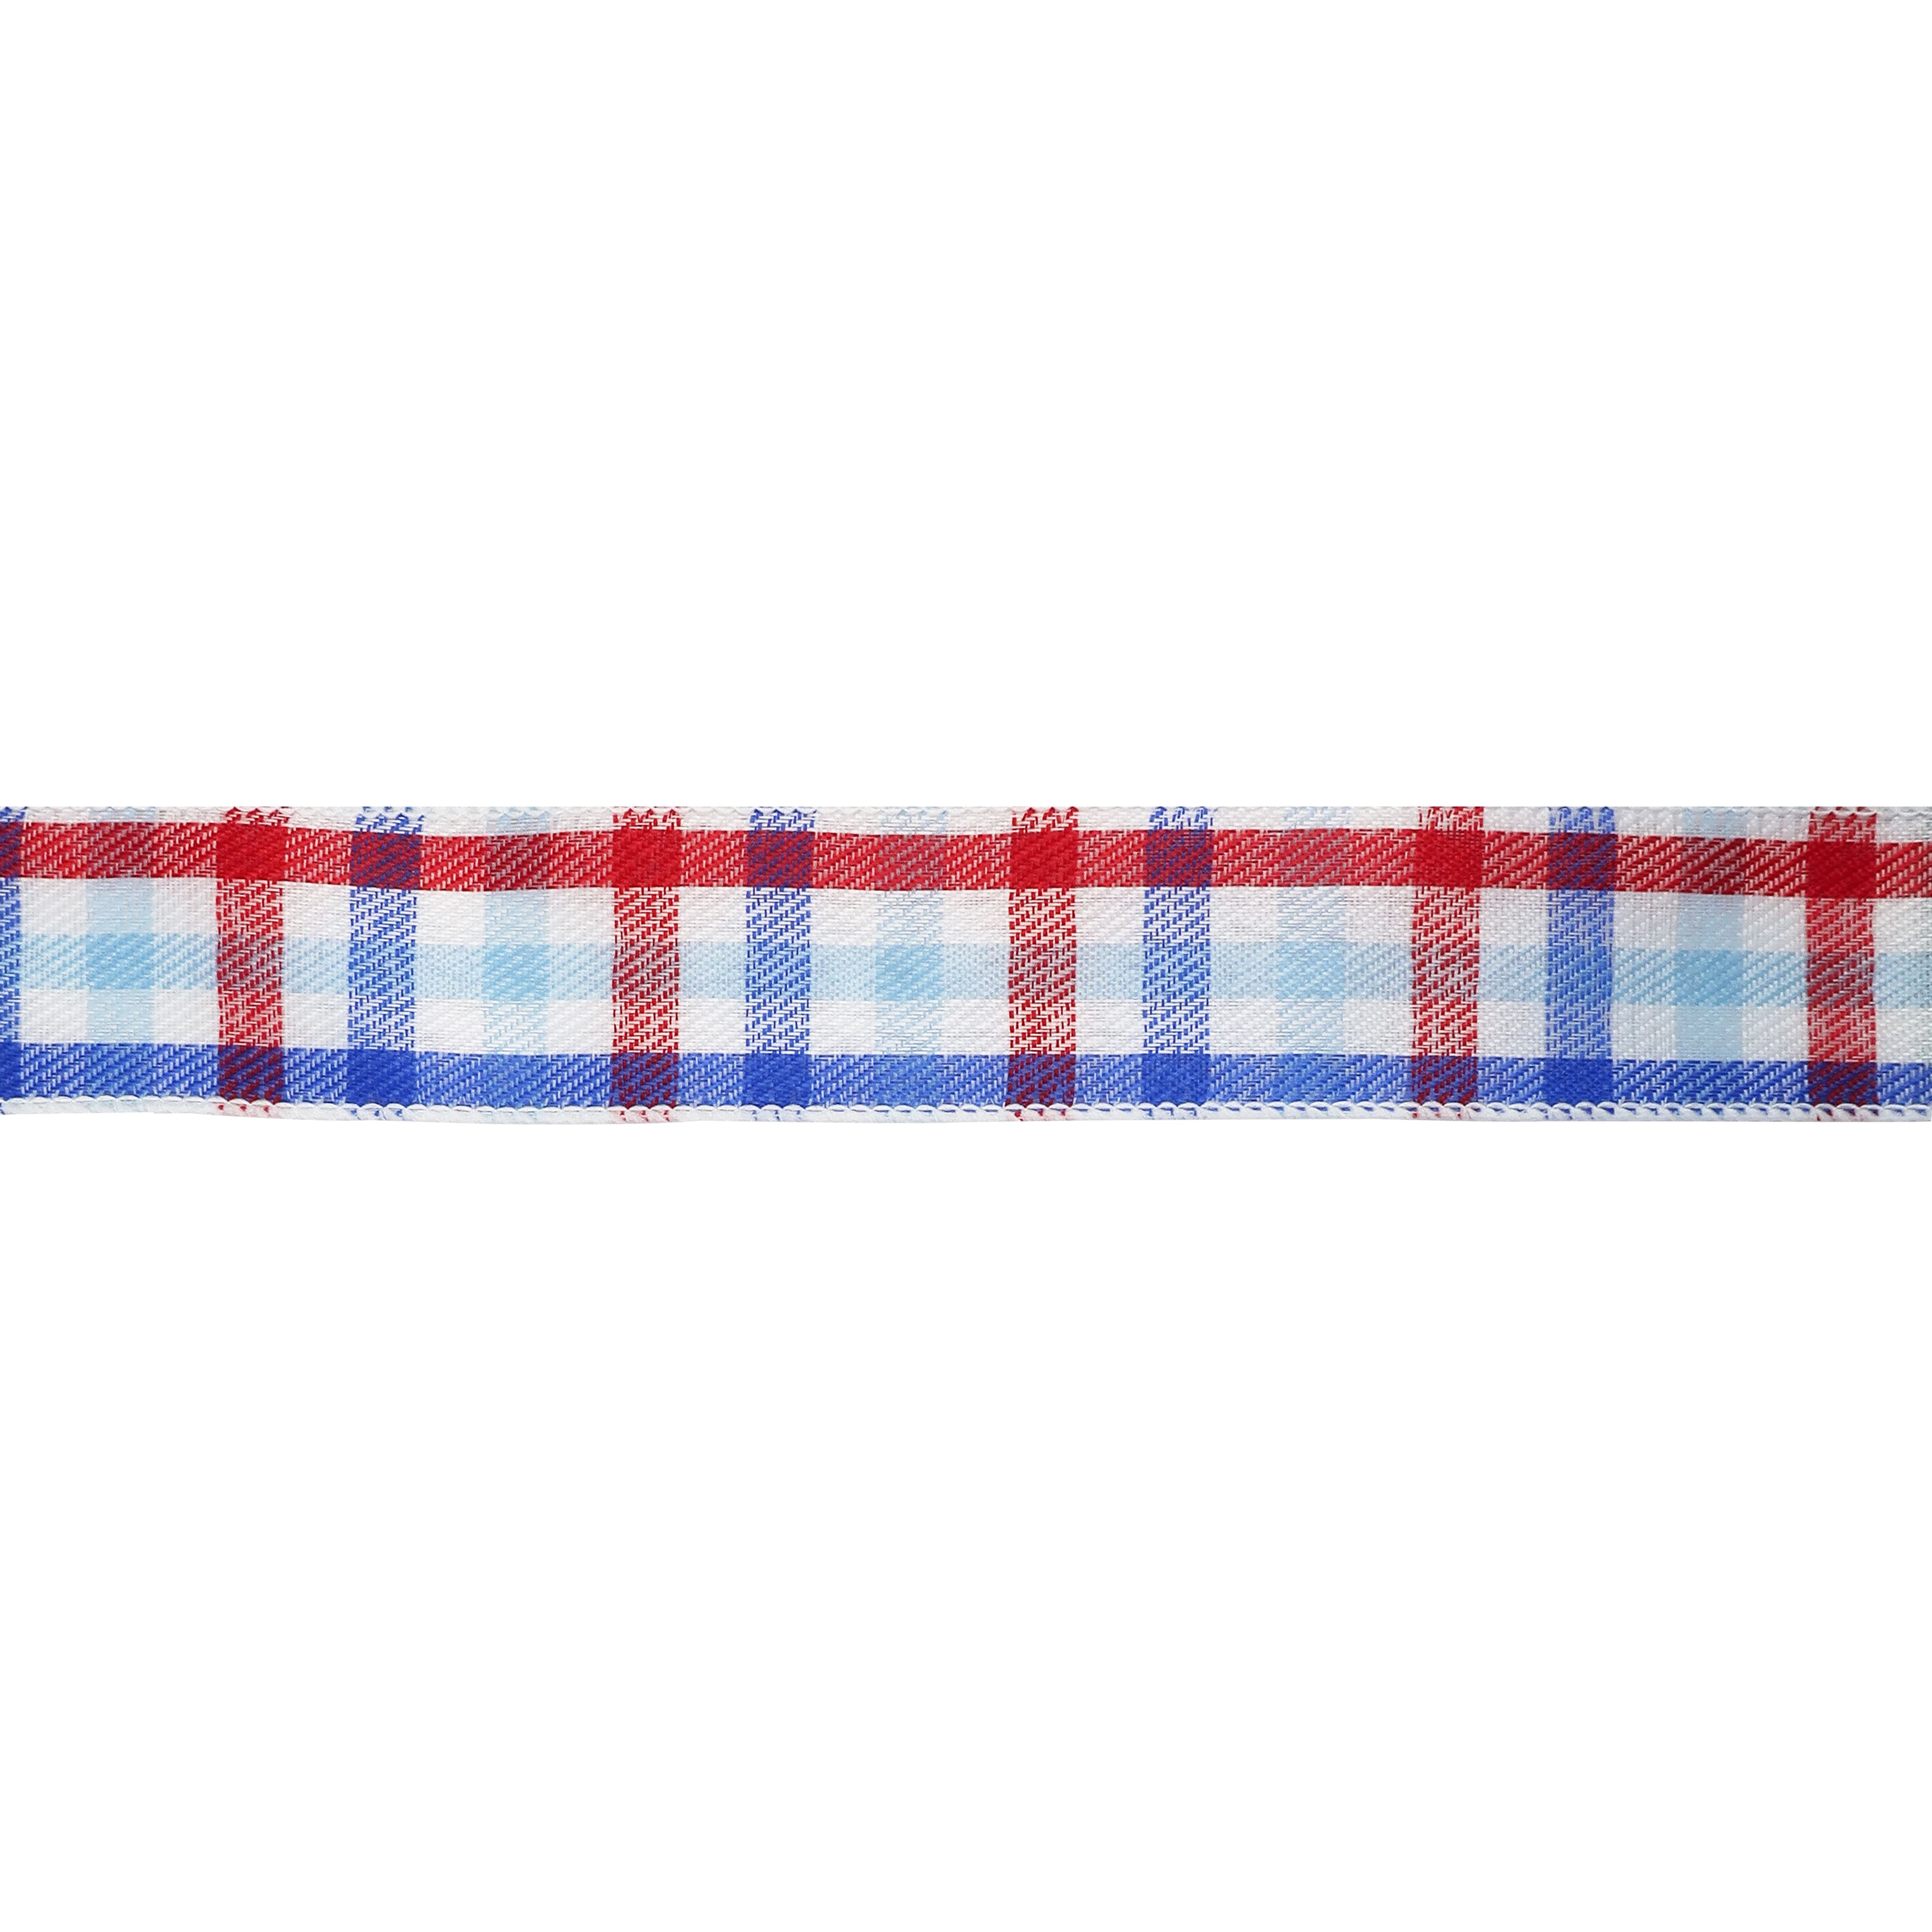 1.5&#x22; x 30ft. Wired Checks Ribbon by Celebrate It&#xAE; Red, White &#x26; Blue